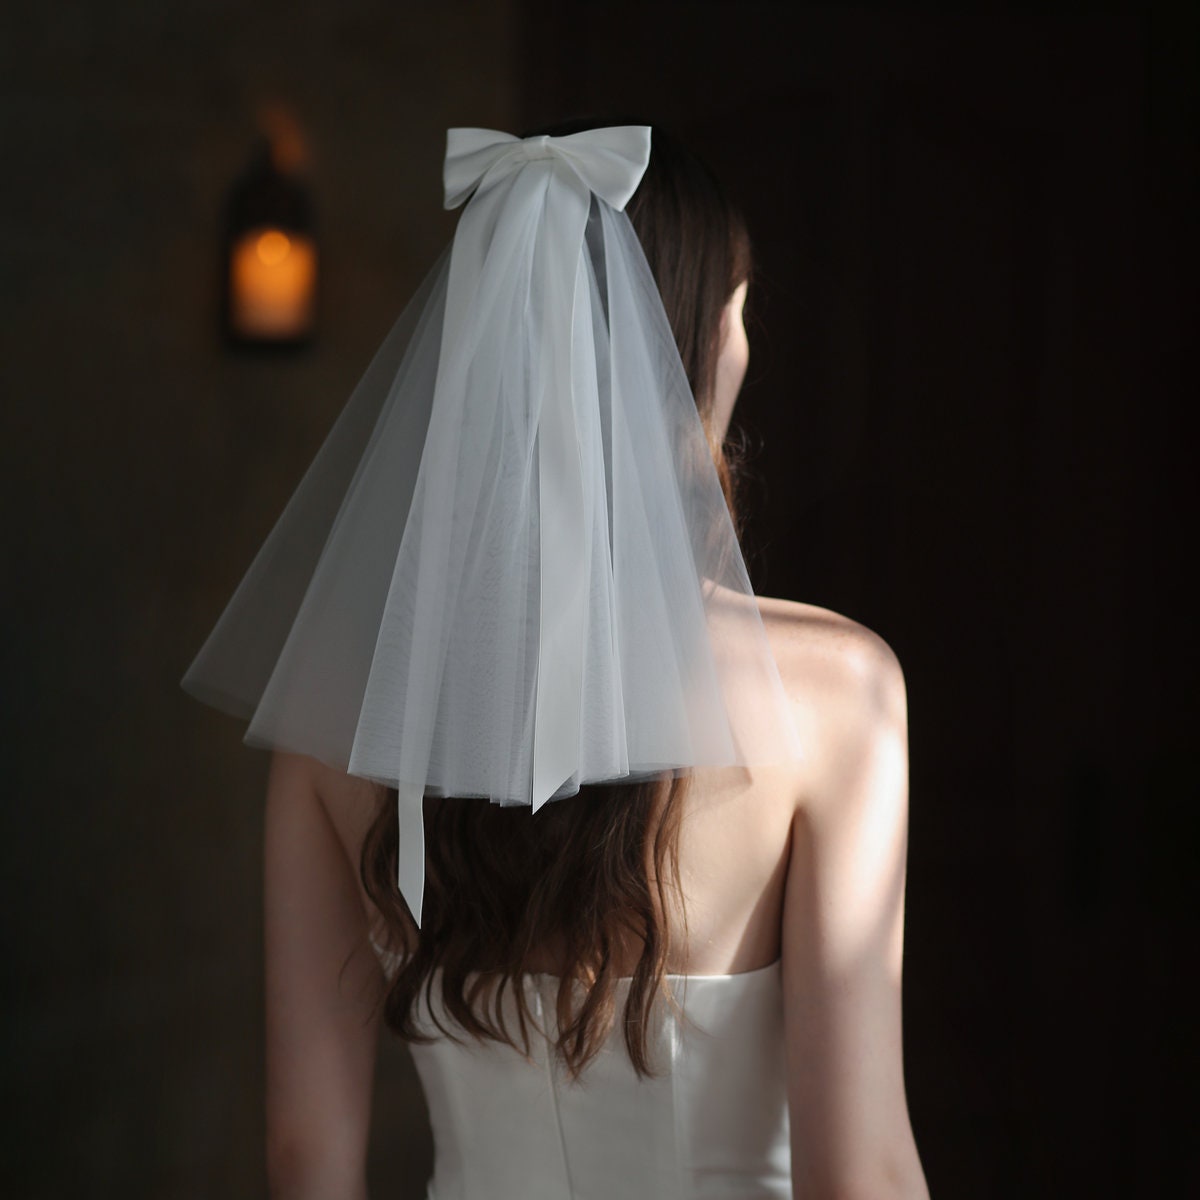 Korea Short Wedding Veil With Bow Tie Detail. 